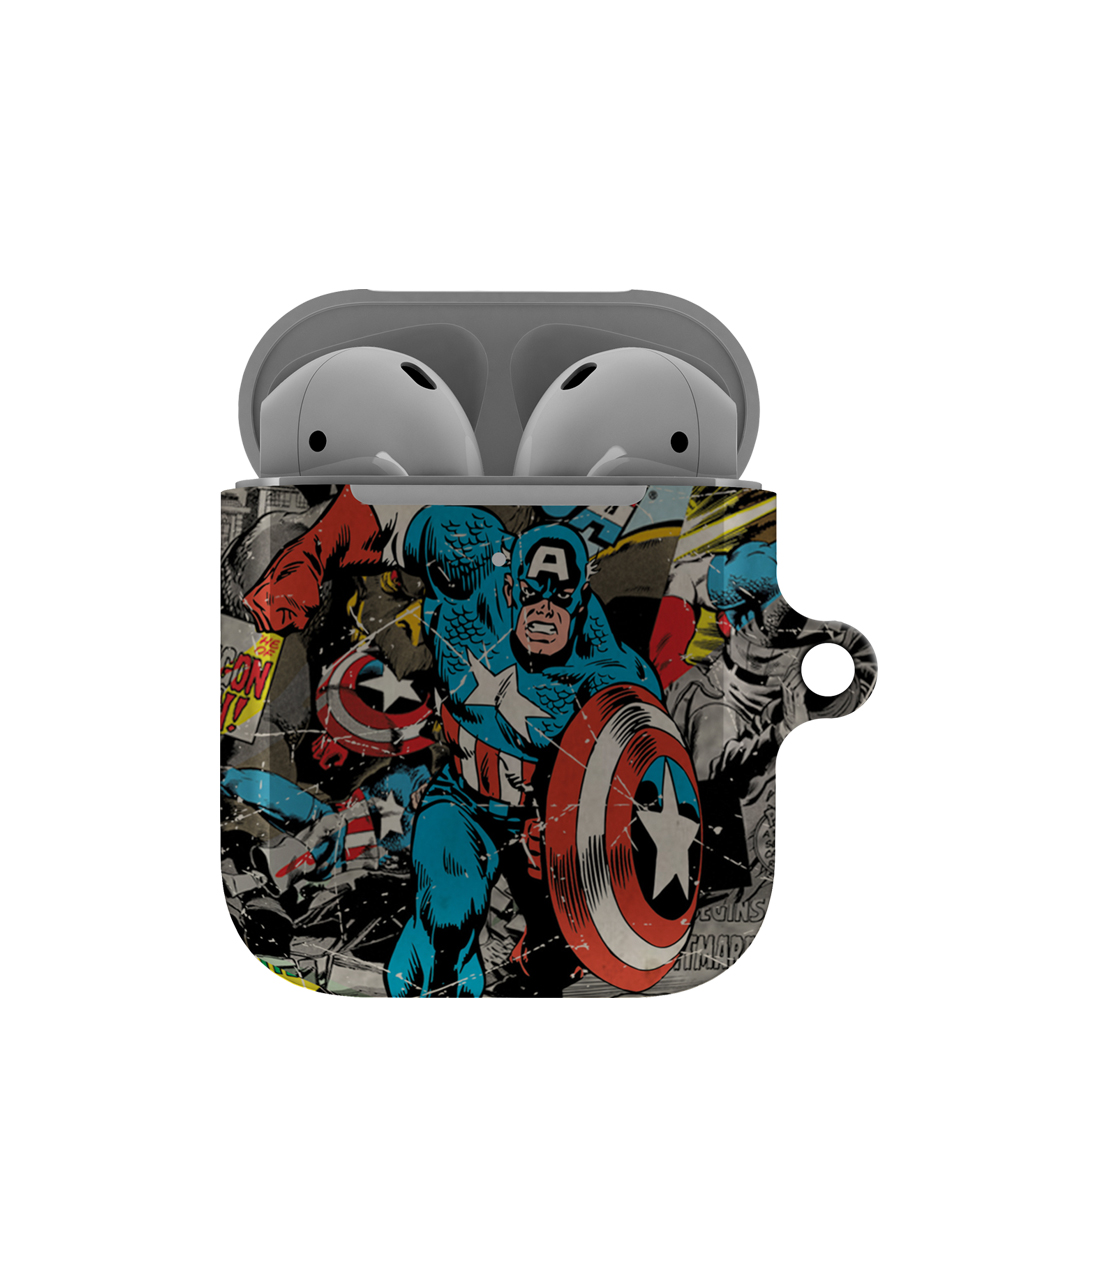 Comic Captain America - Hard Shell Airpod Case (2nd Gen)